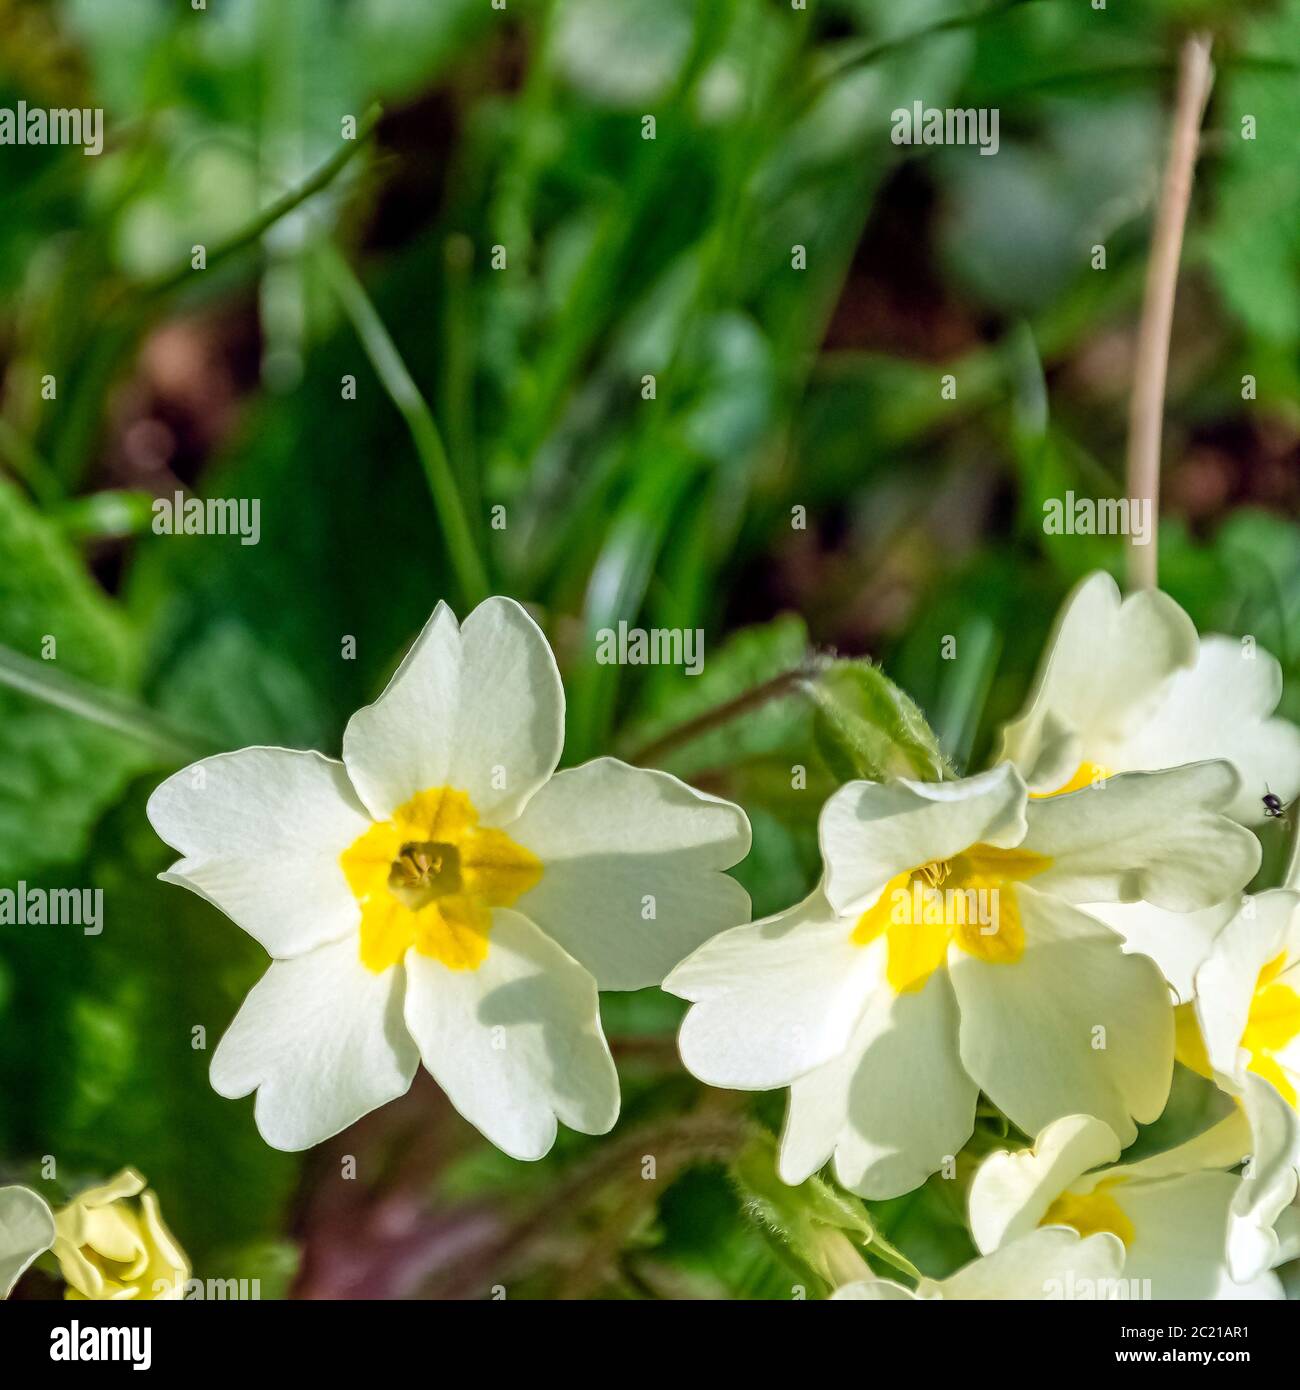 Primula vulgaris known as common primrose or English primrose - wild spring flowers in British park - Stowe, Buckinghamshire, United Kingdom Stock Photo